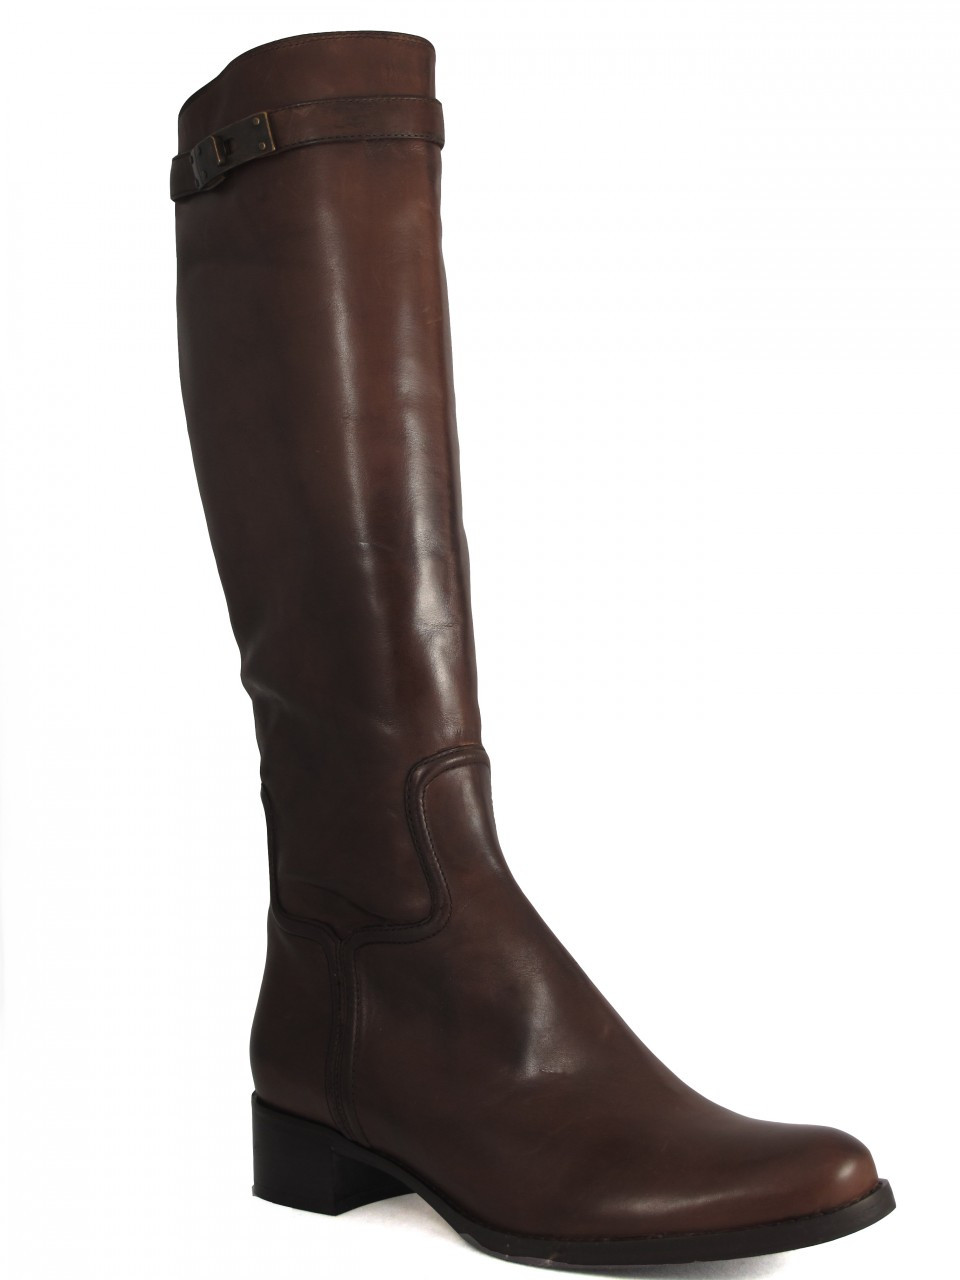 Le Pepe Women's Italian Leather Knee high Flat Boots 670218